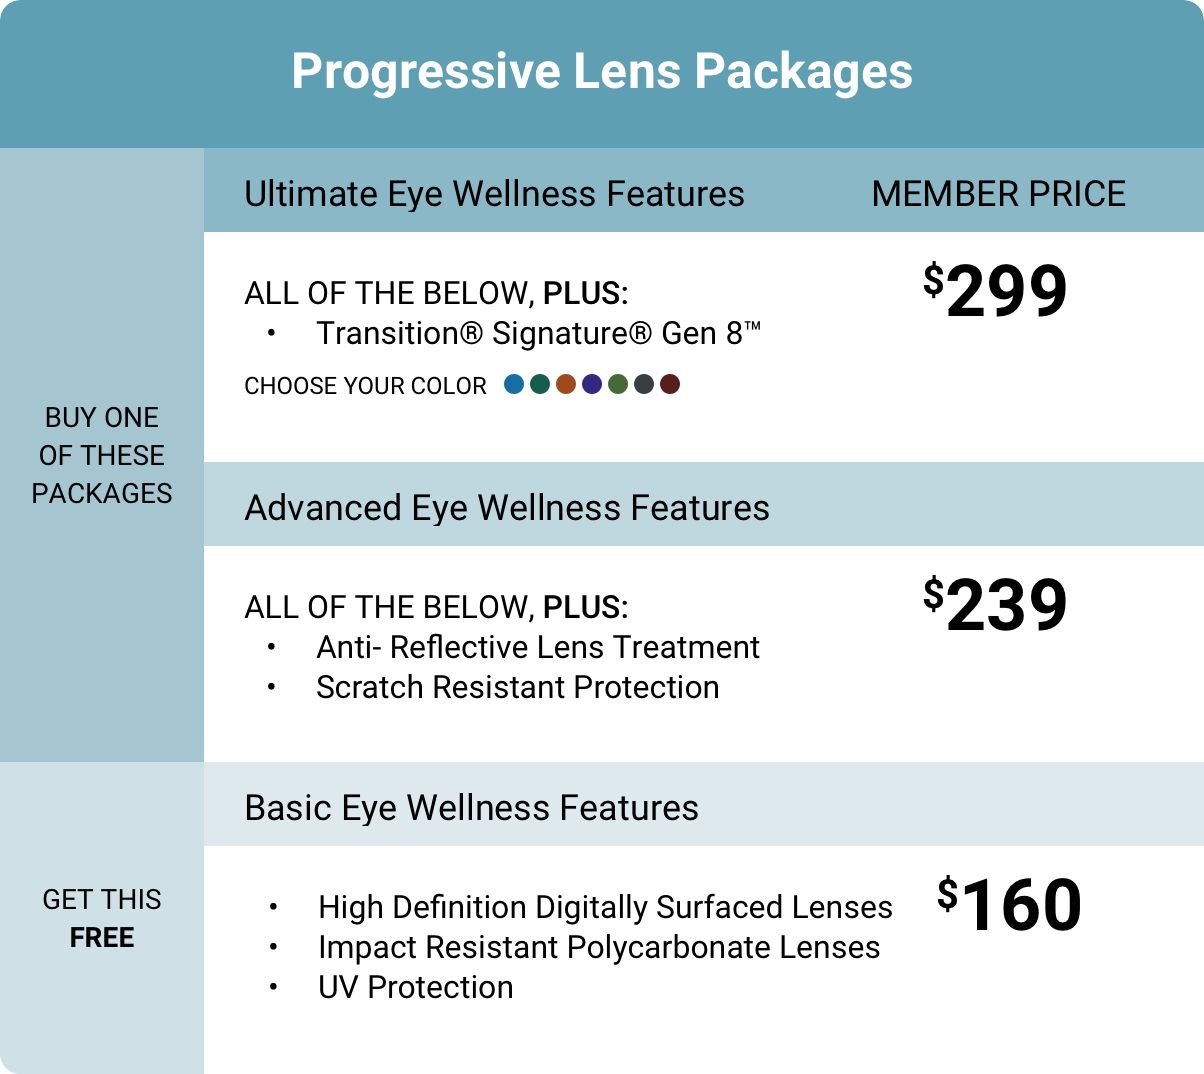 Progressive Lens Packages